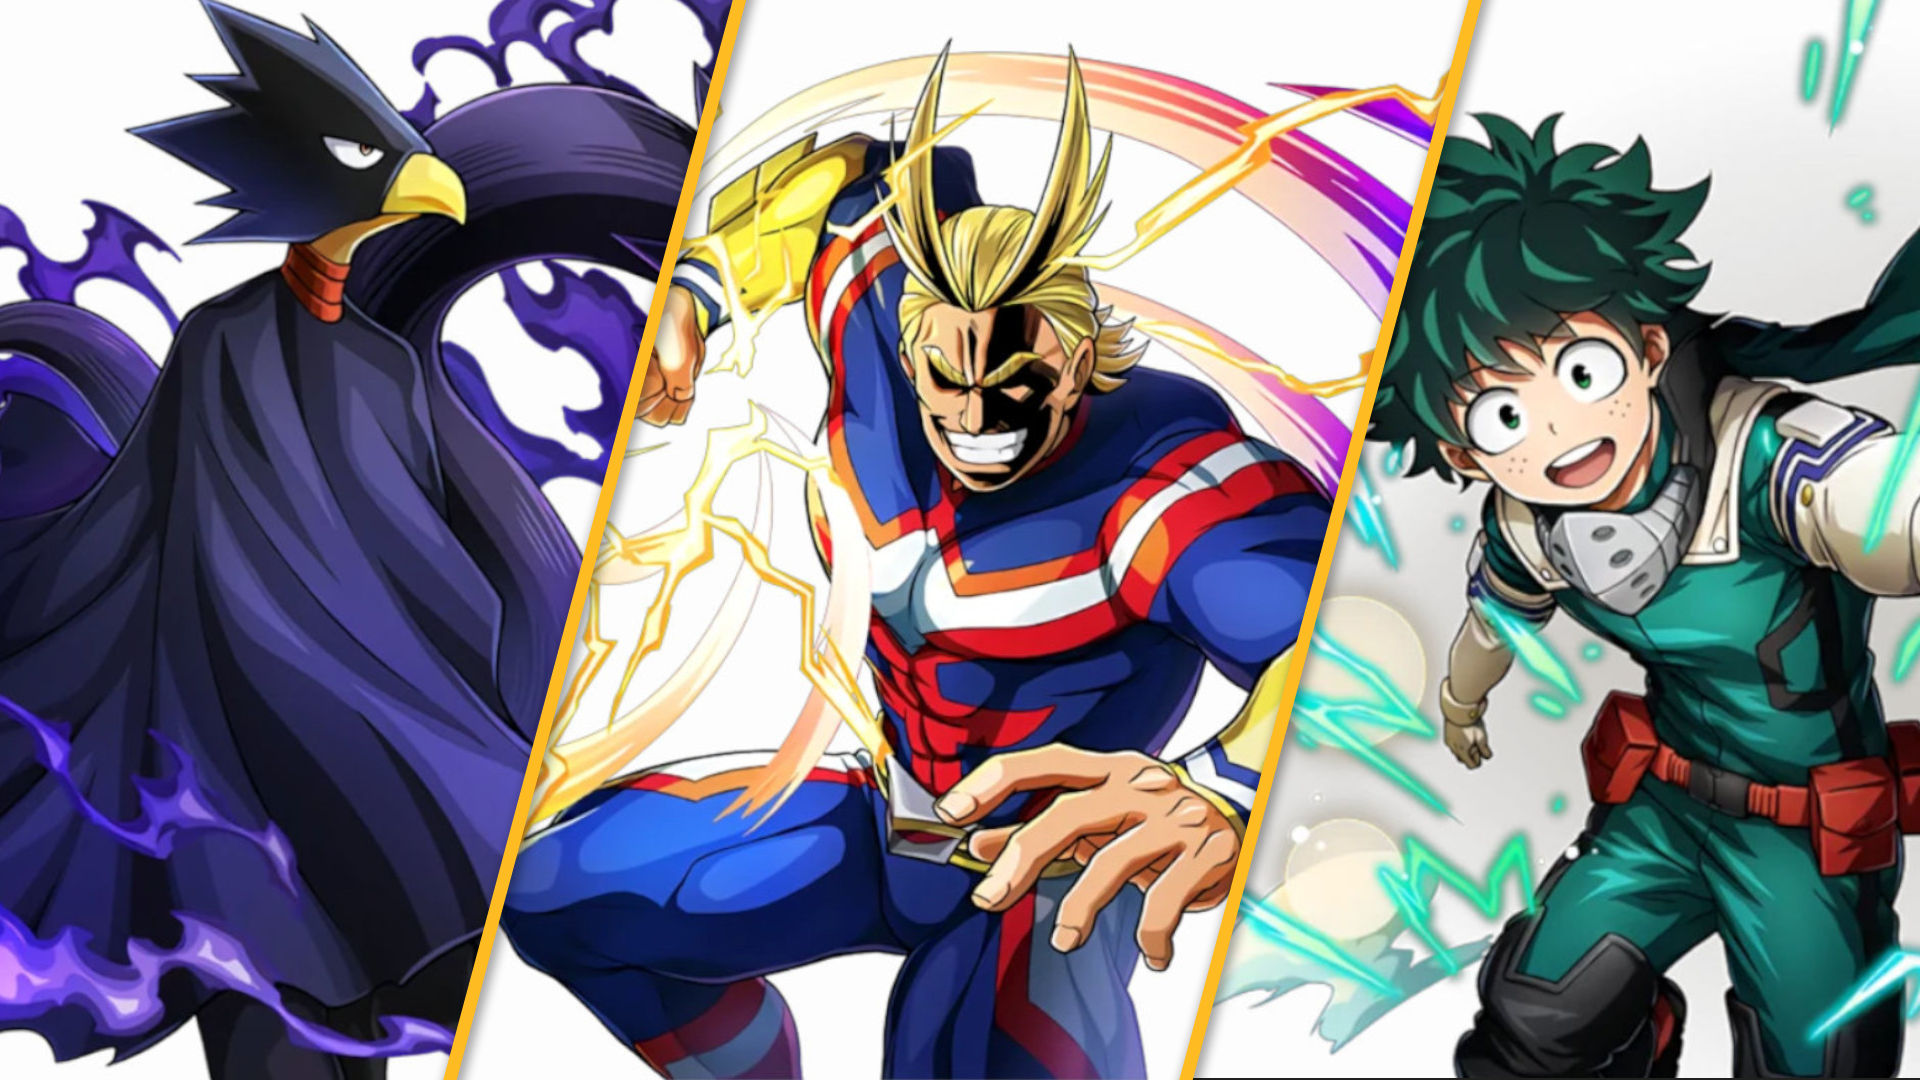 New My Hero Academia Anime Special Announced